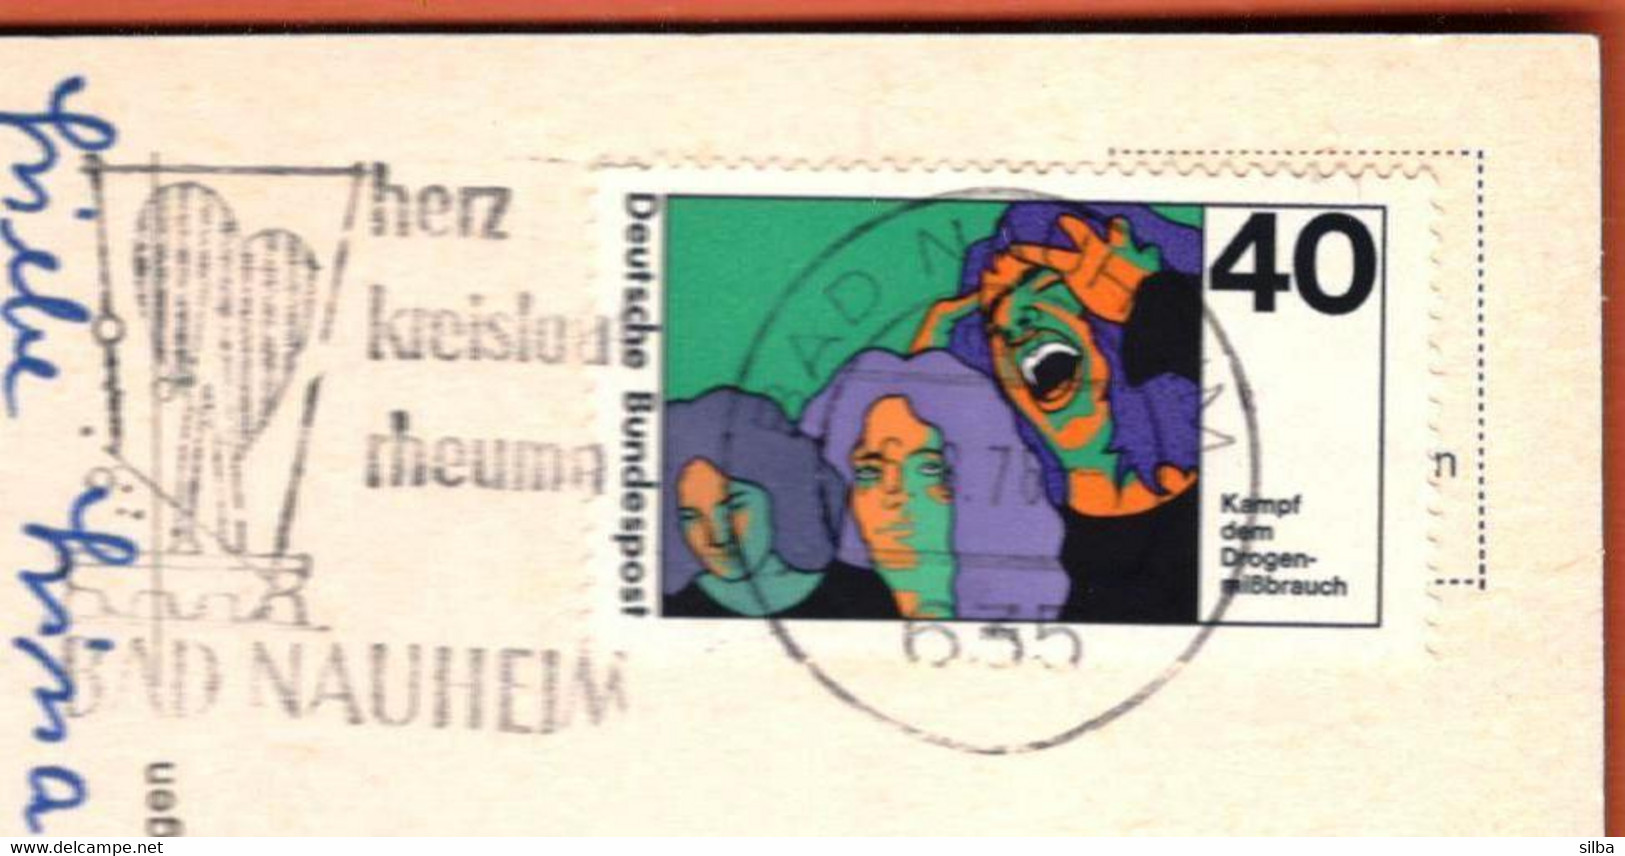 Germany Bad Nauheim 1976 / Herz, Kreislauf, Rheuma, Heart, Circulation, Rheumatism / Health / Machine Stamp ATM - Thermalisme